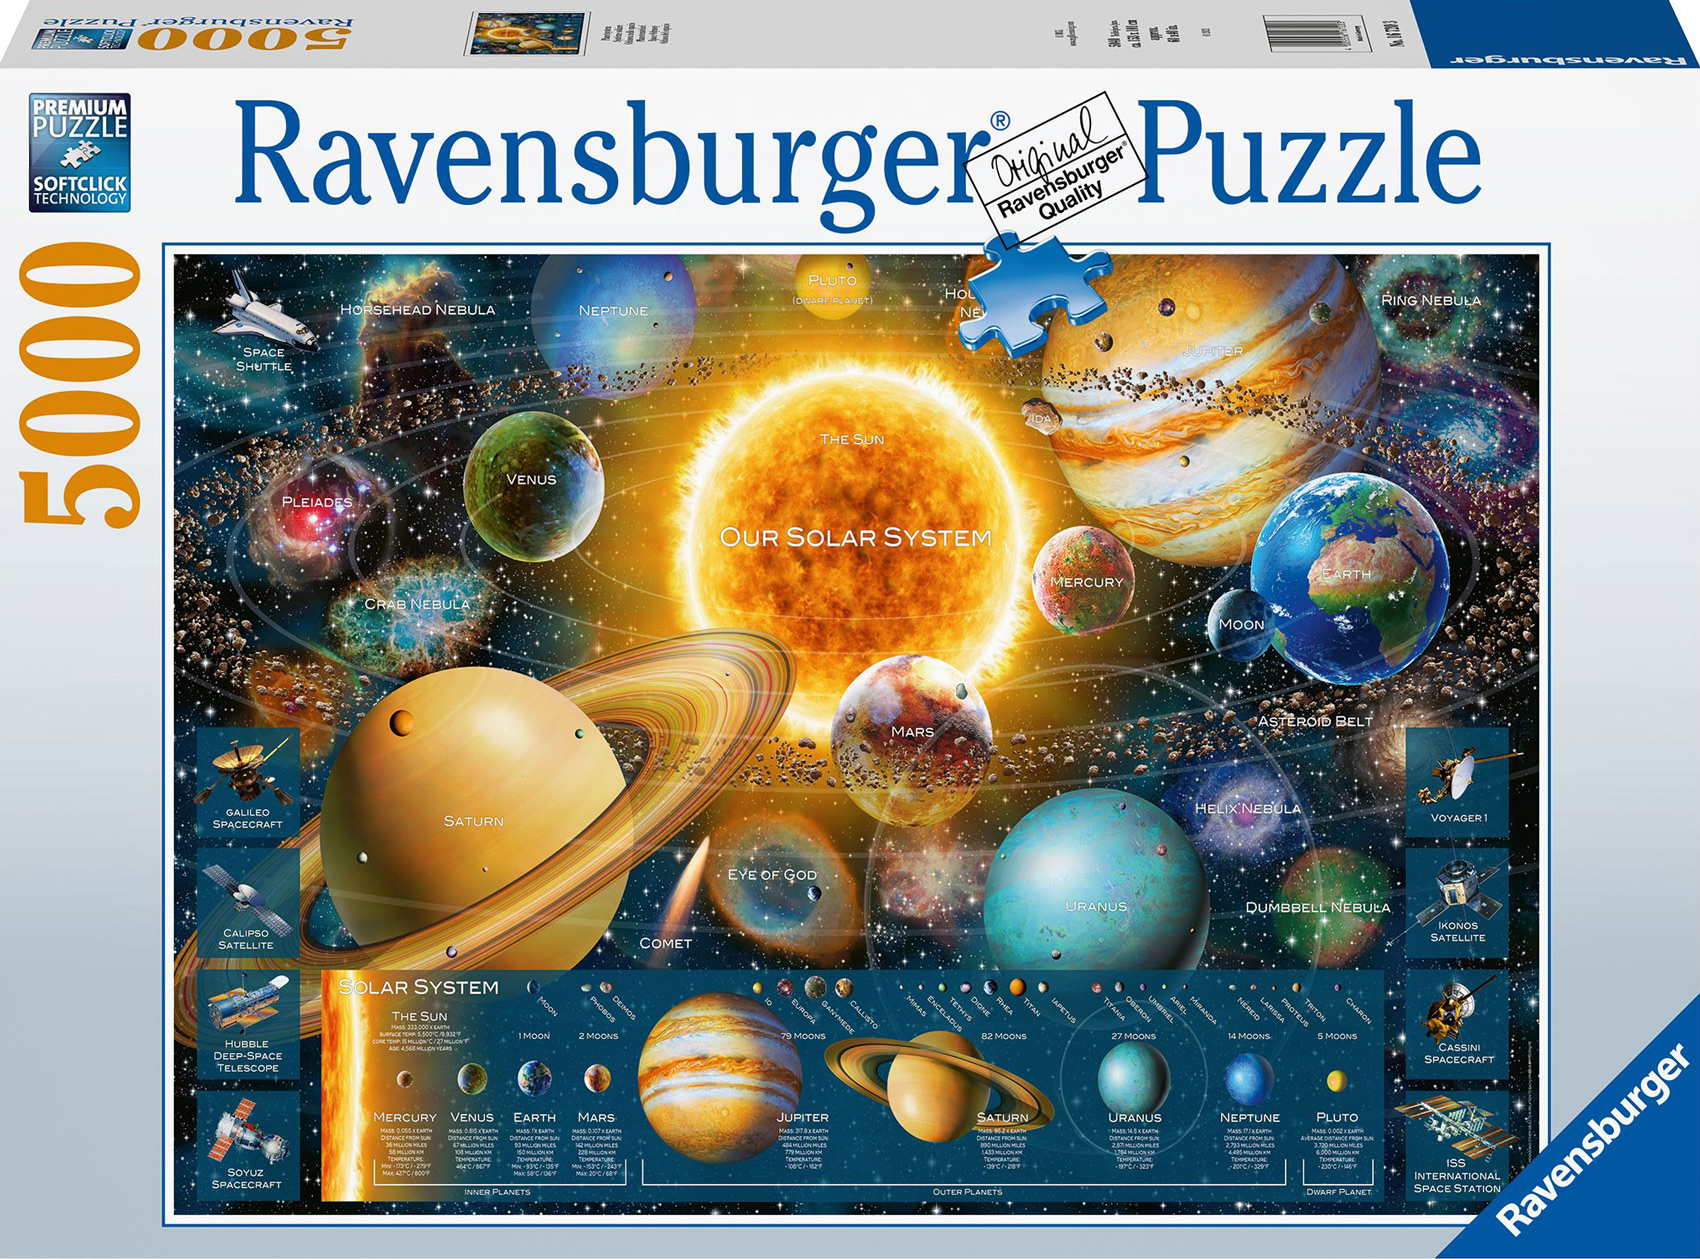 Ravensburger The Fantastic Street 5000 Piece Puzzle – The Puzzle